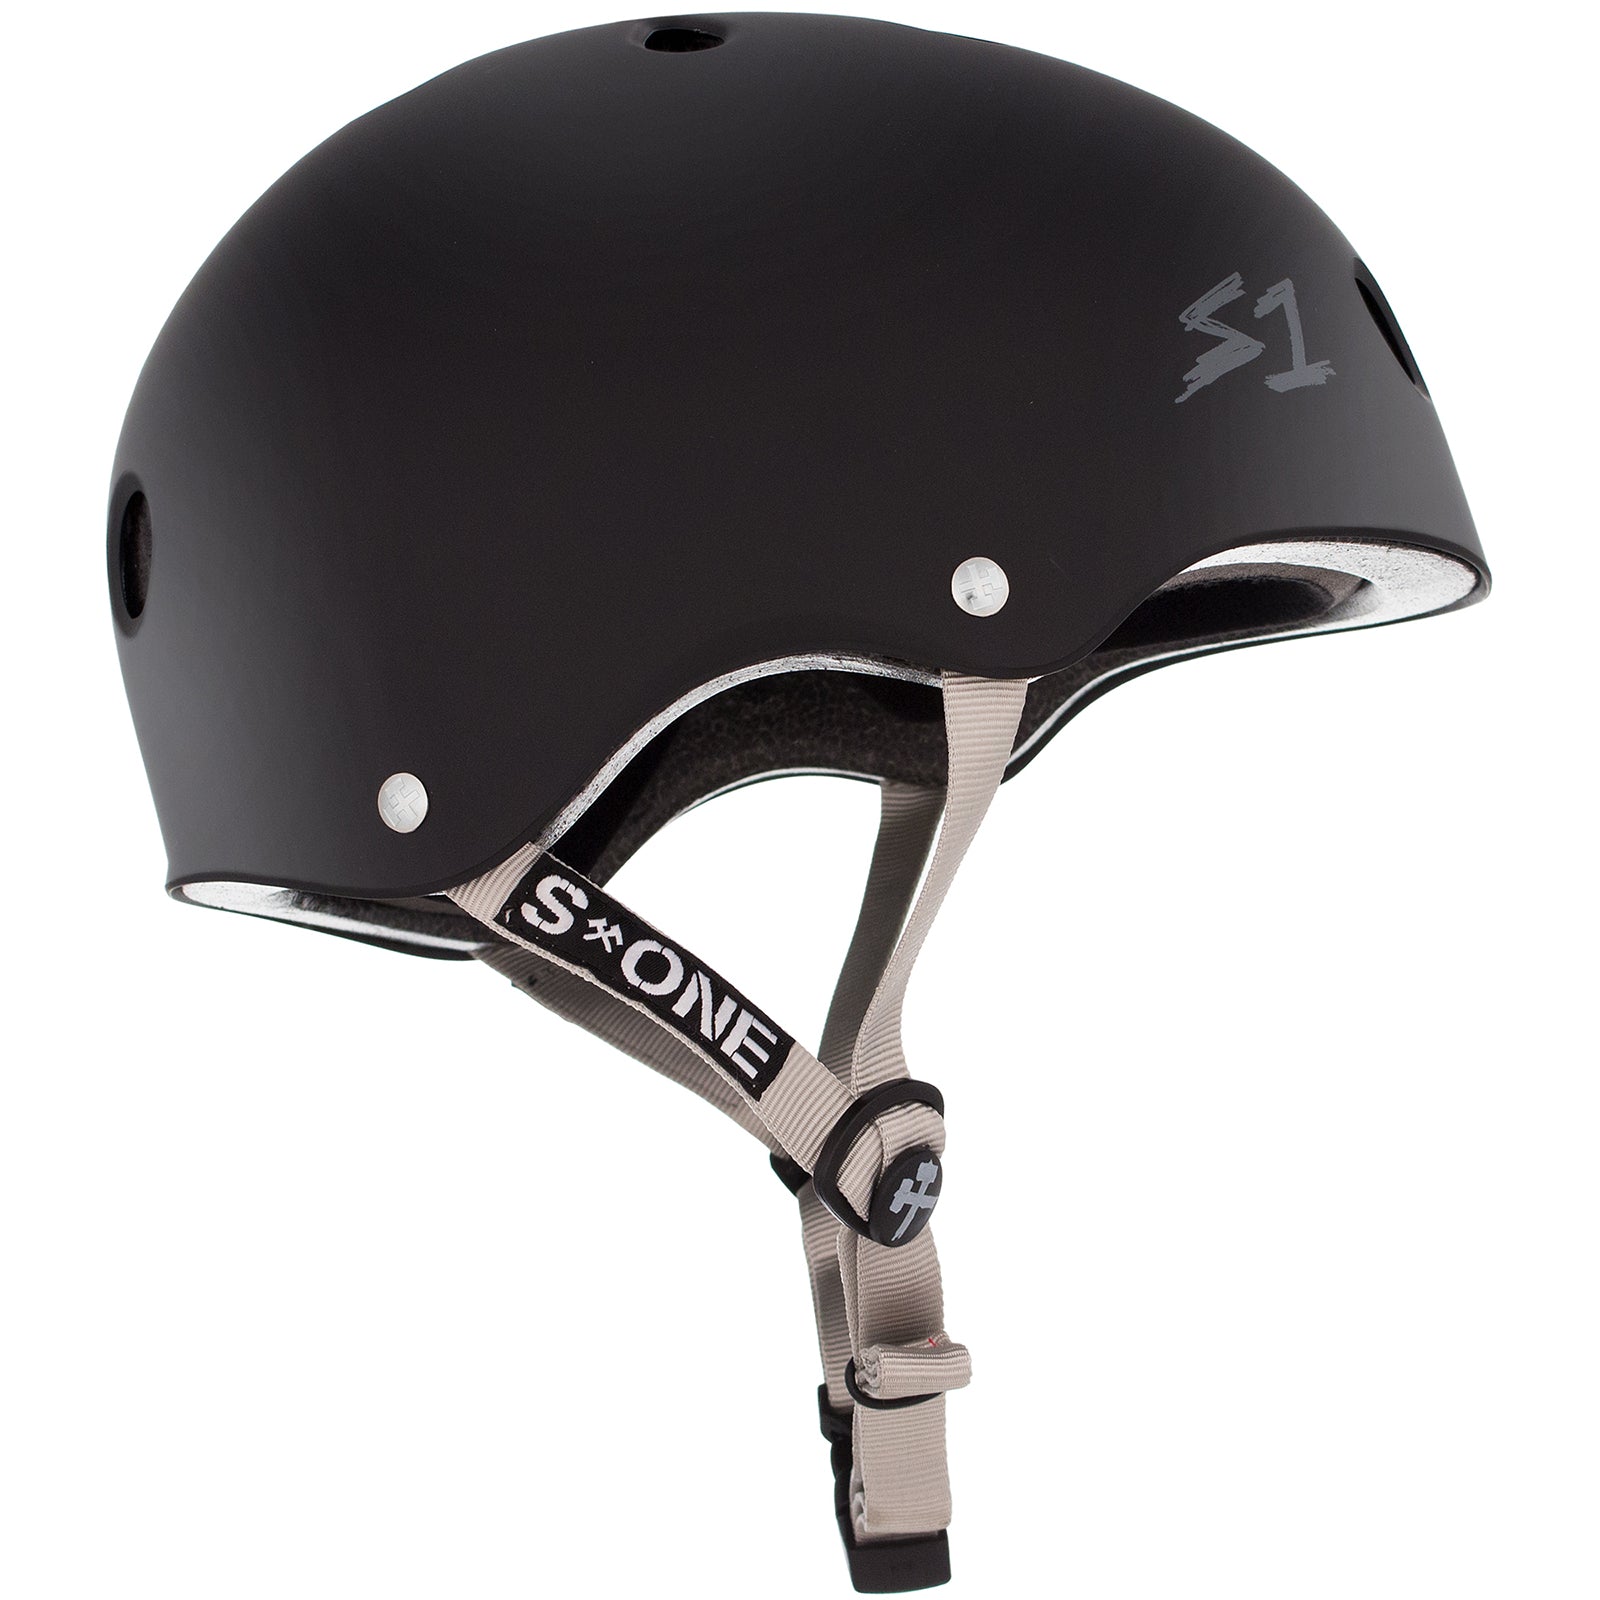 S1 Lifer Helmet - Mast black helmet with gray straps